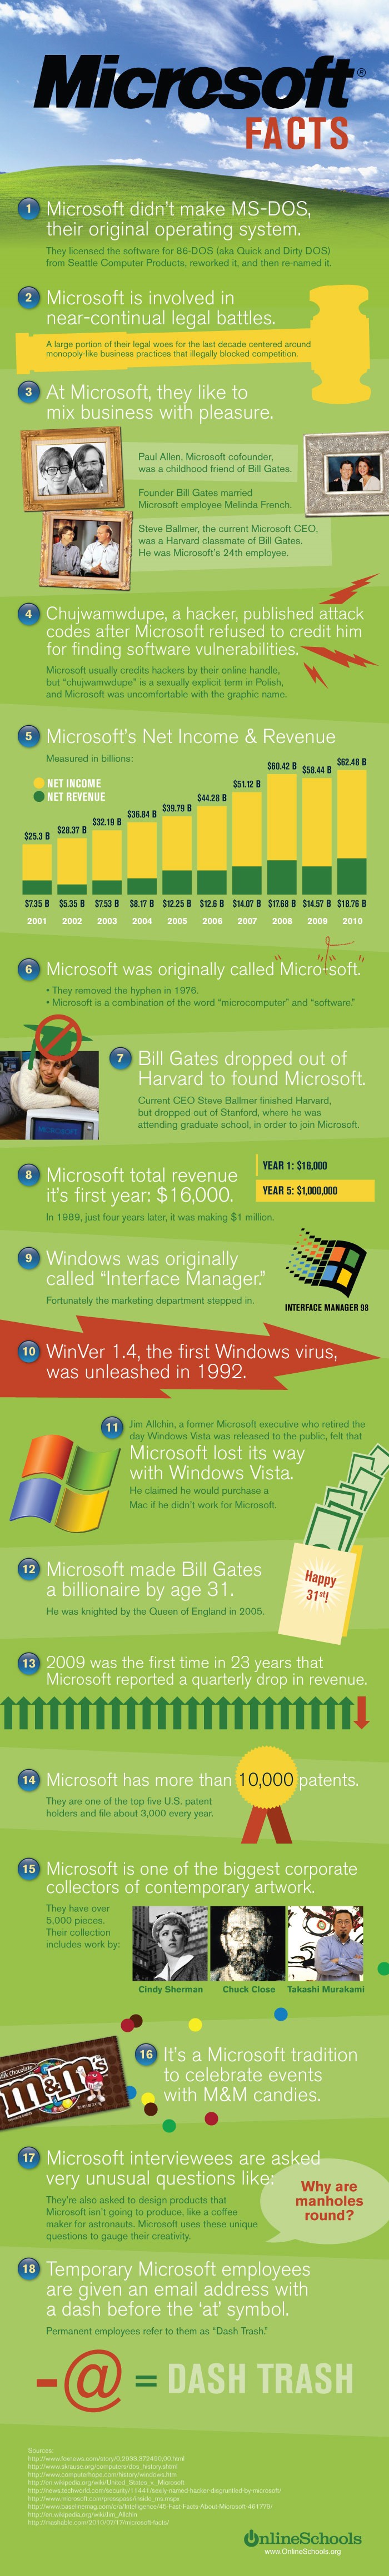 Microsoft-Facts